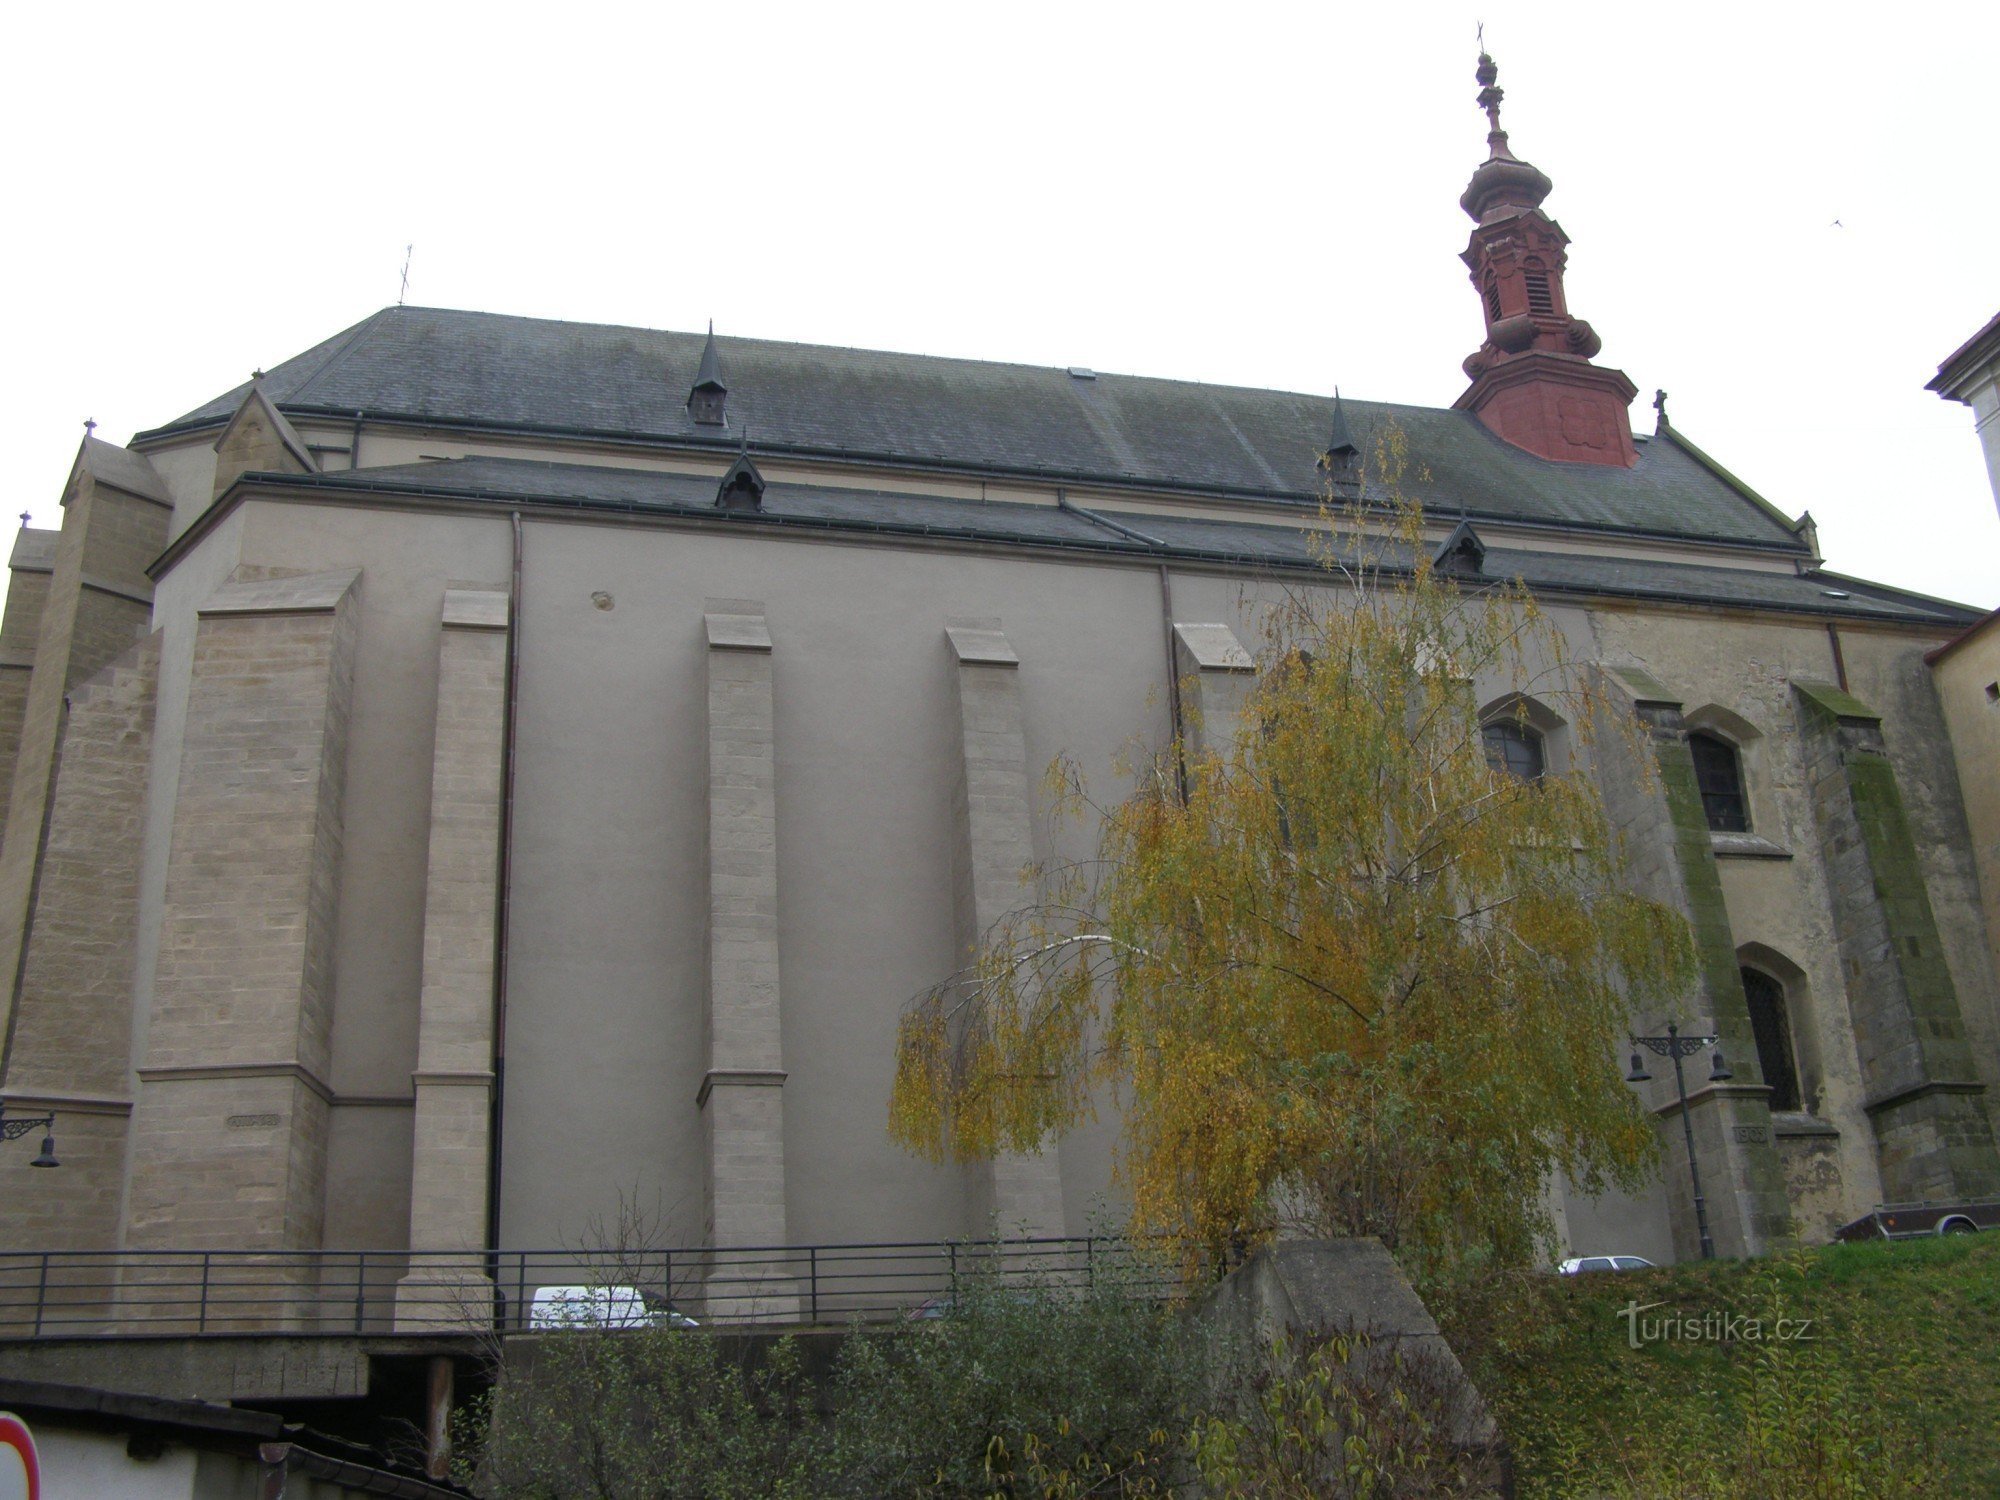 Jaroměř - kirken St. Nicholas